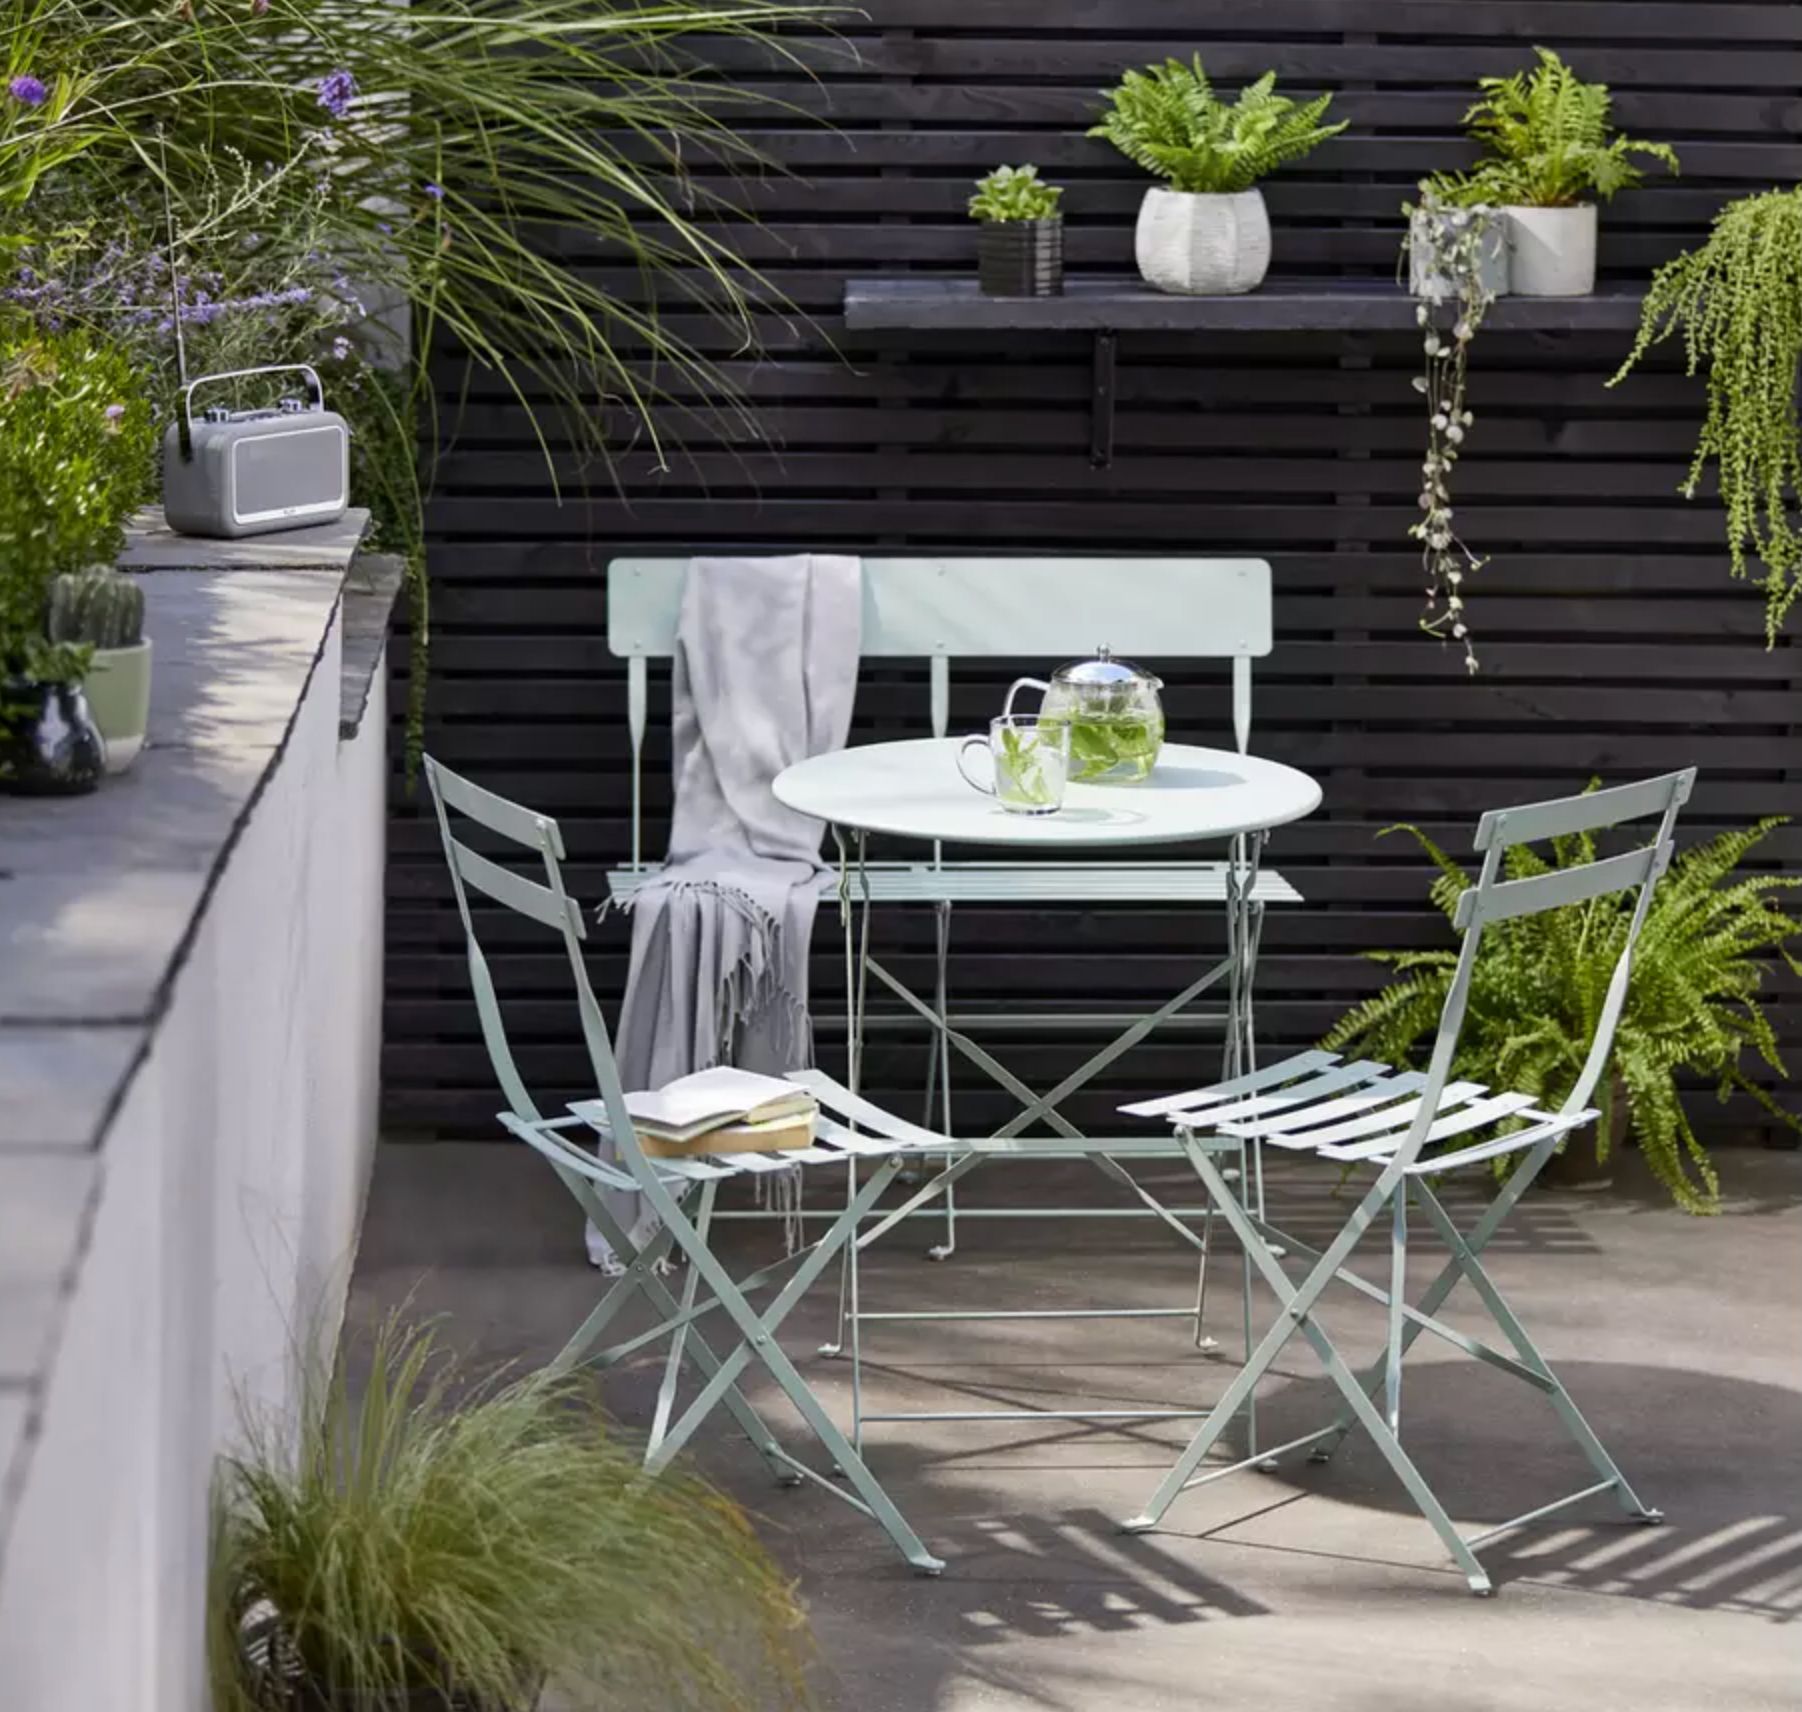 Backyard patio ideas: designs to enhance every outdoor space